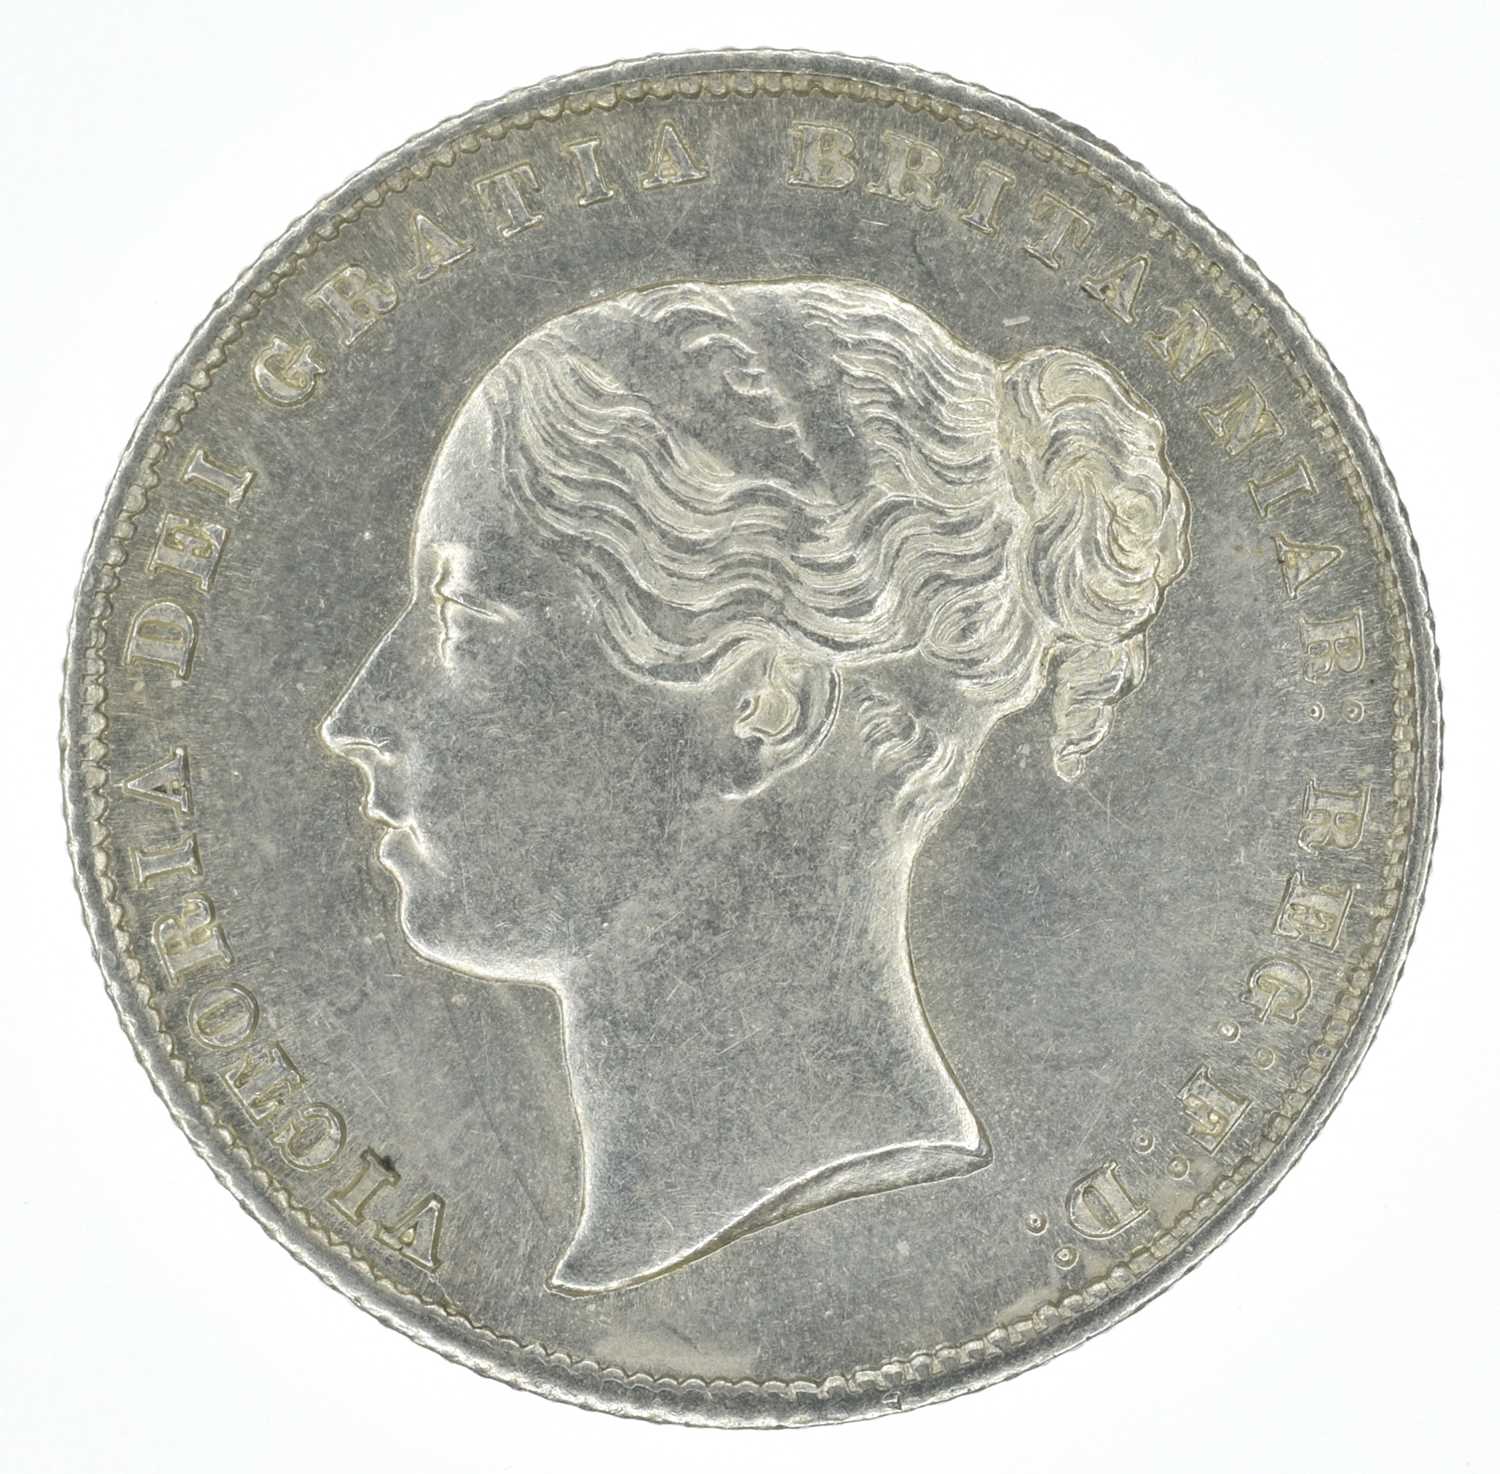 Lot 55 - Queen Victoria, Shilling, 1859, gEF.